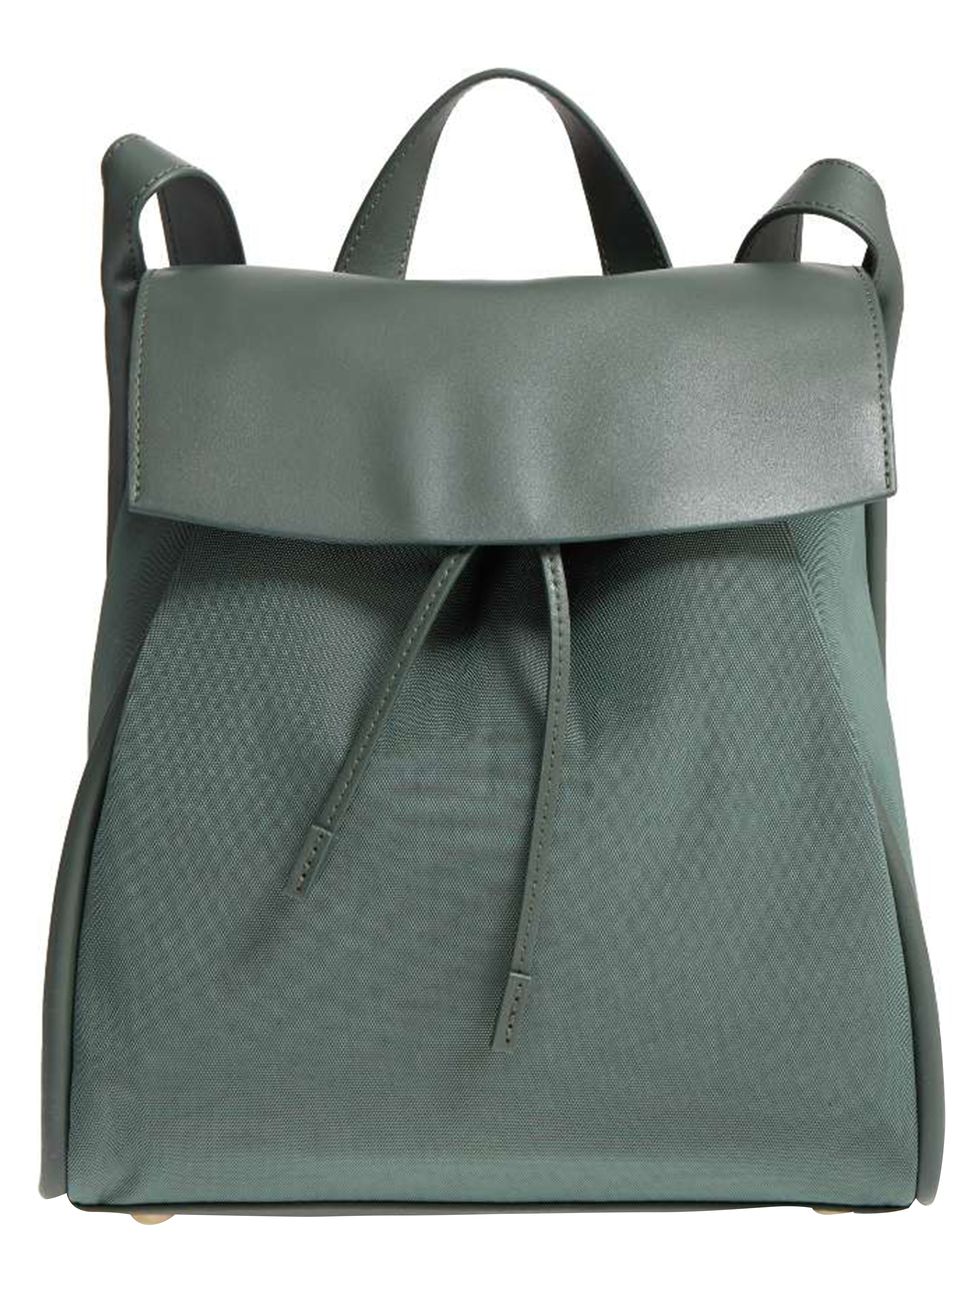 Bag, Handbag, Green, Product, Fashion accessory, Shoulder bag, Leather, Luggage and bags, Tote bag, Diaper bag, 